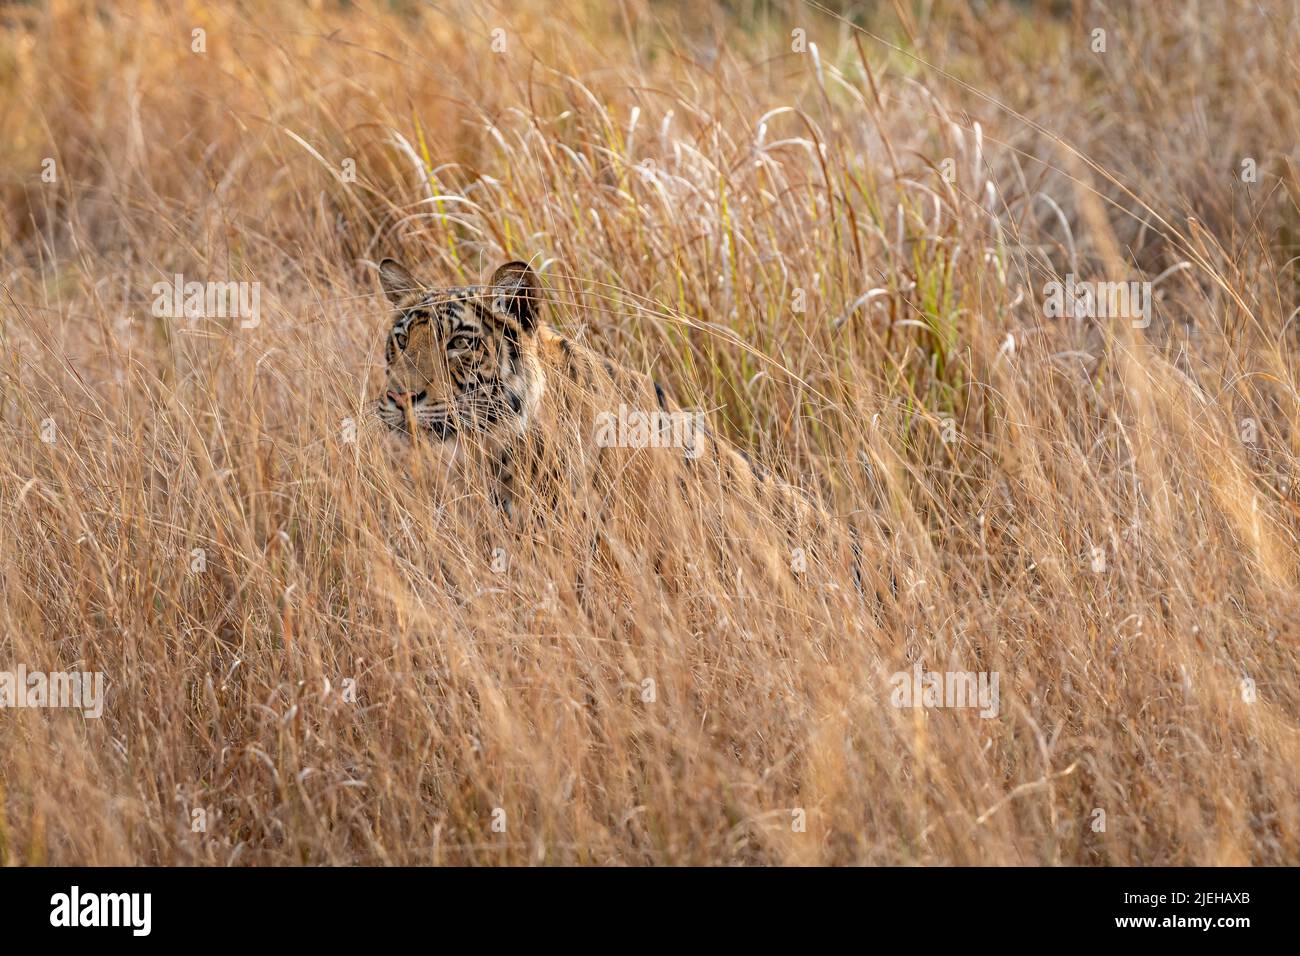 Femelle sauvage indienne tigre du bengale ou panthera tigris tigris camouflage dans l'herbe à bandhavgarh parc national forêt madhya pradesh inde asie Banque D'Images